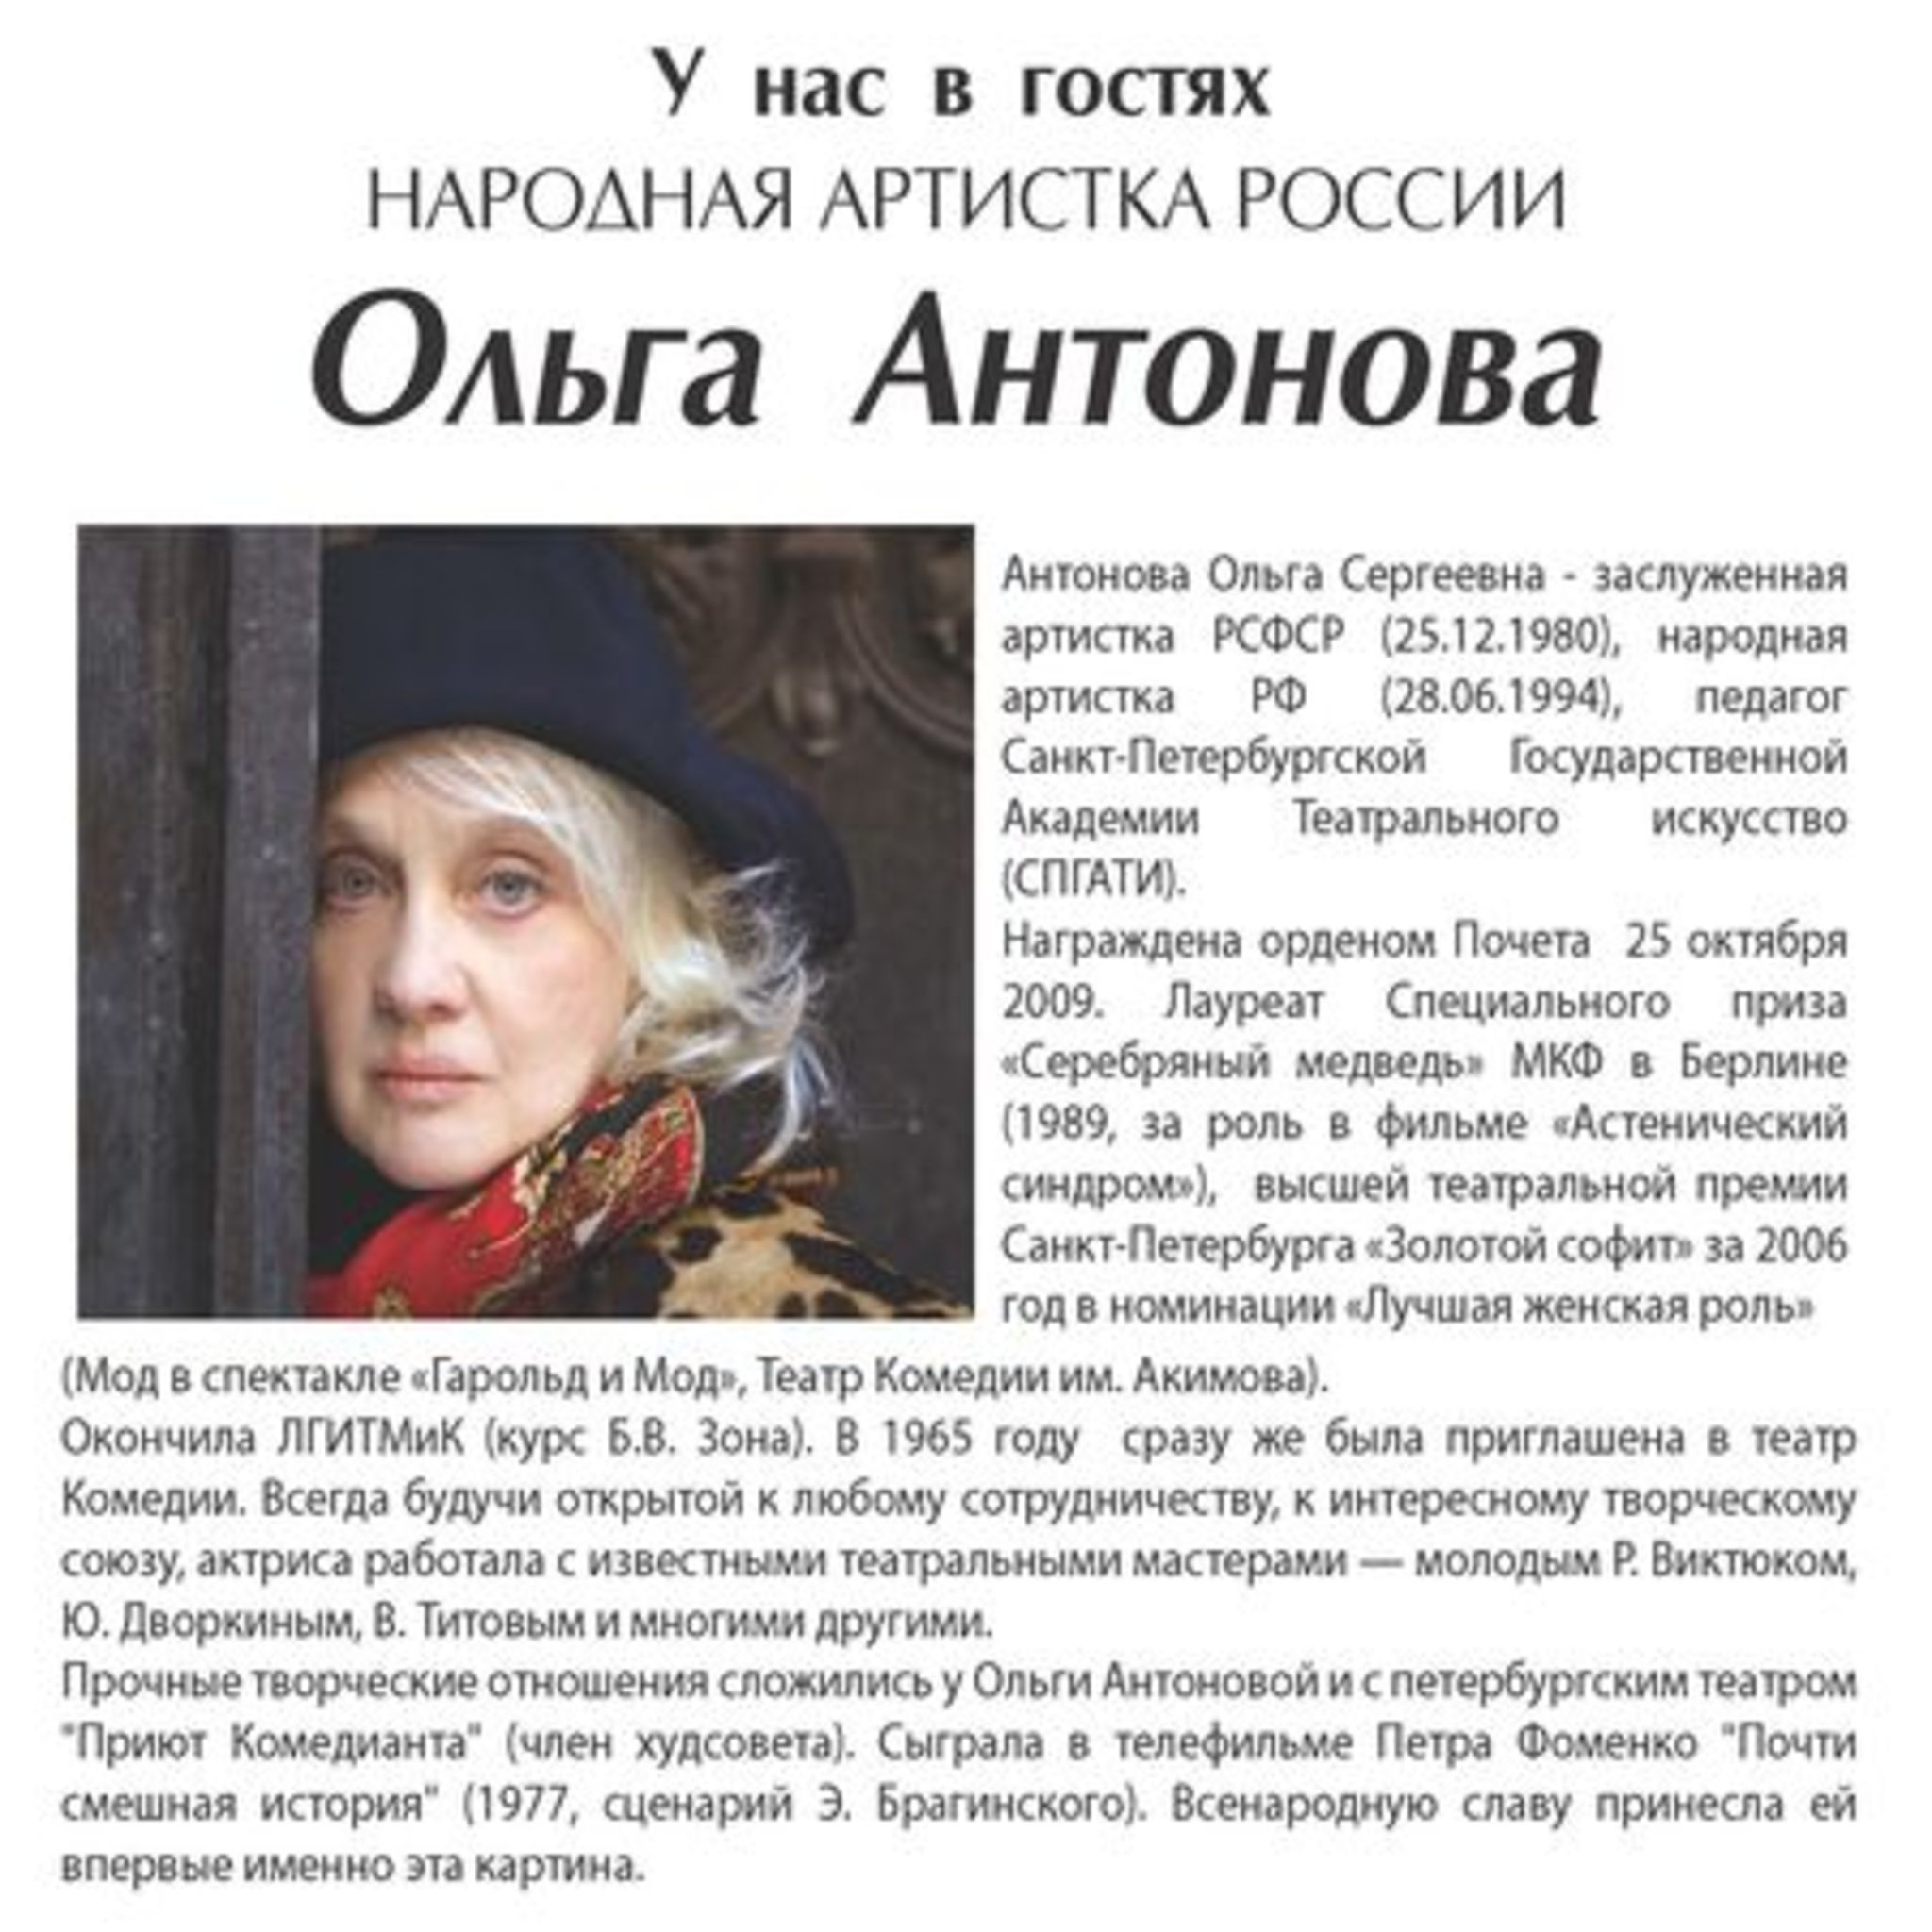 The meeting with Olga Antonova